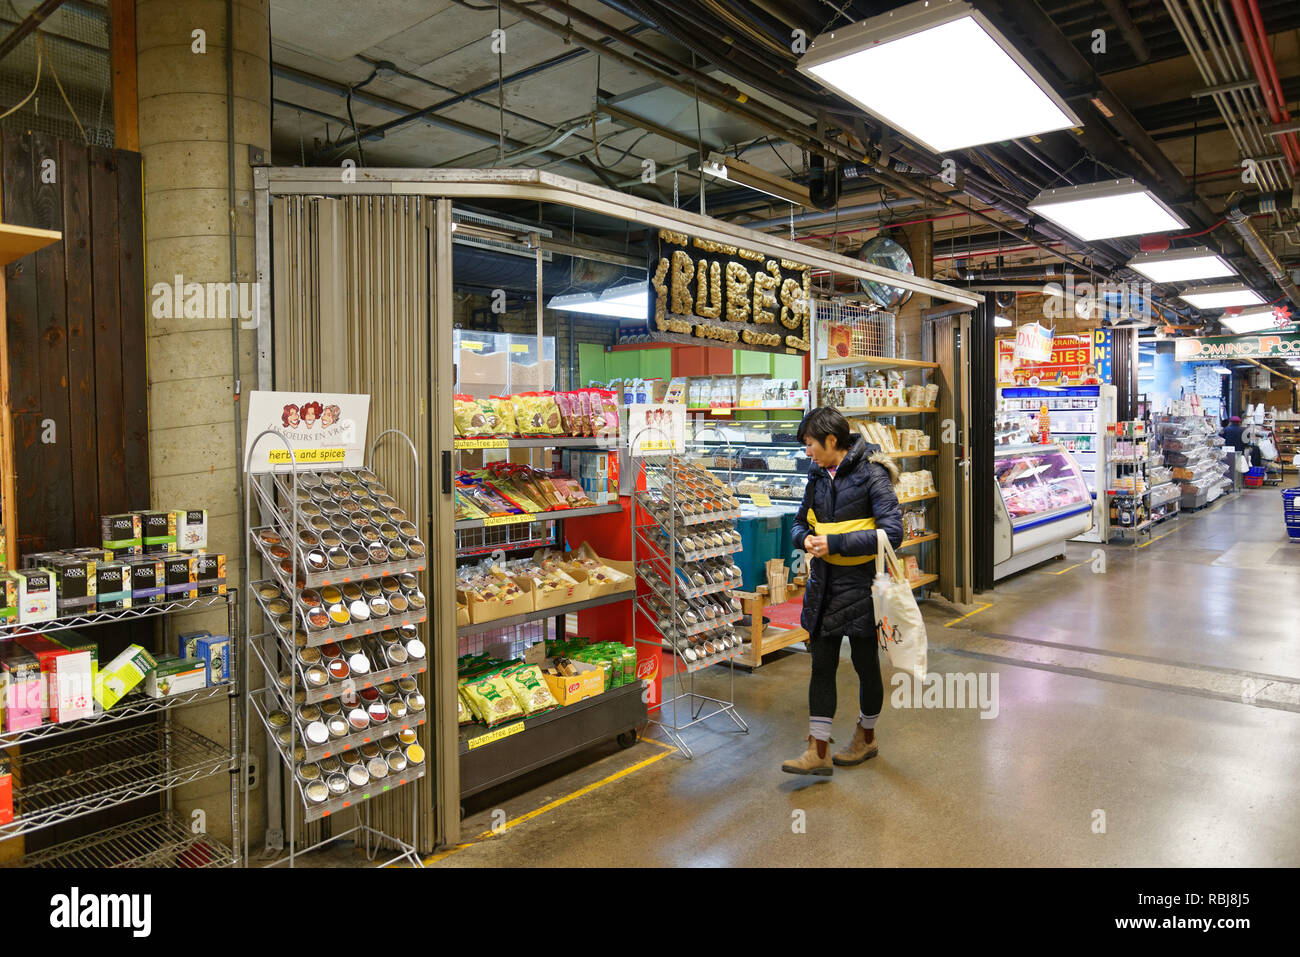 Die Rube Reis Shop im St Lawrence Markt in Toronto, Kanada Stockfoto